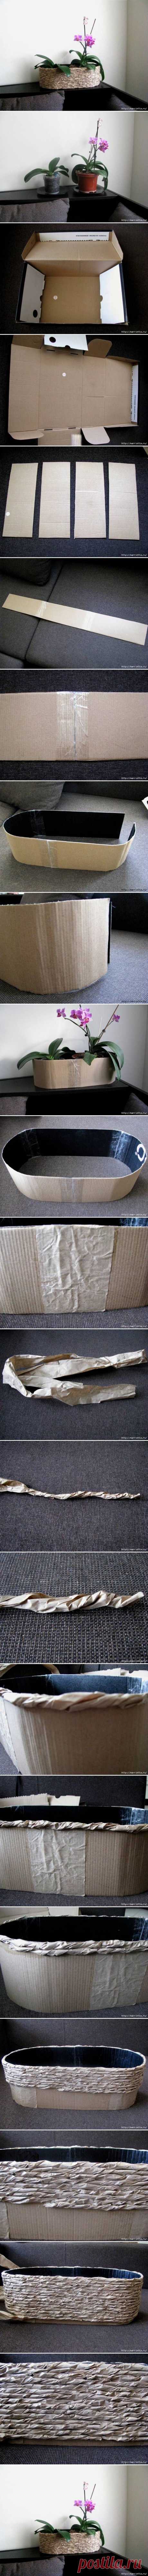 DIY Cardboard and Packaging Paper Plant Pot DIY Projects | UsefulDIY.com